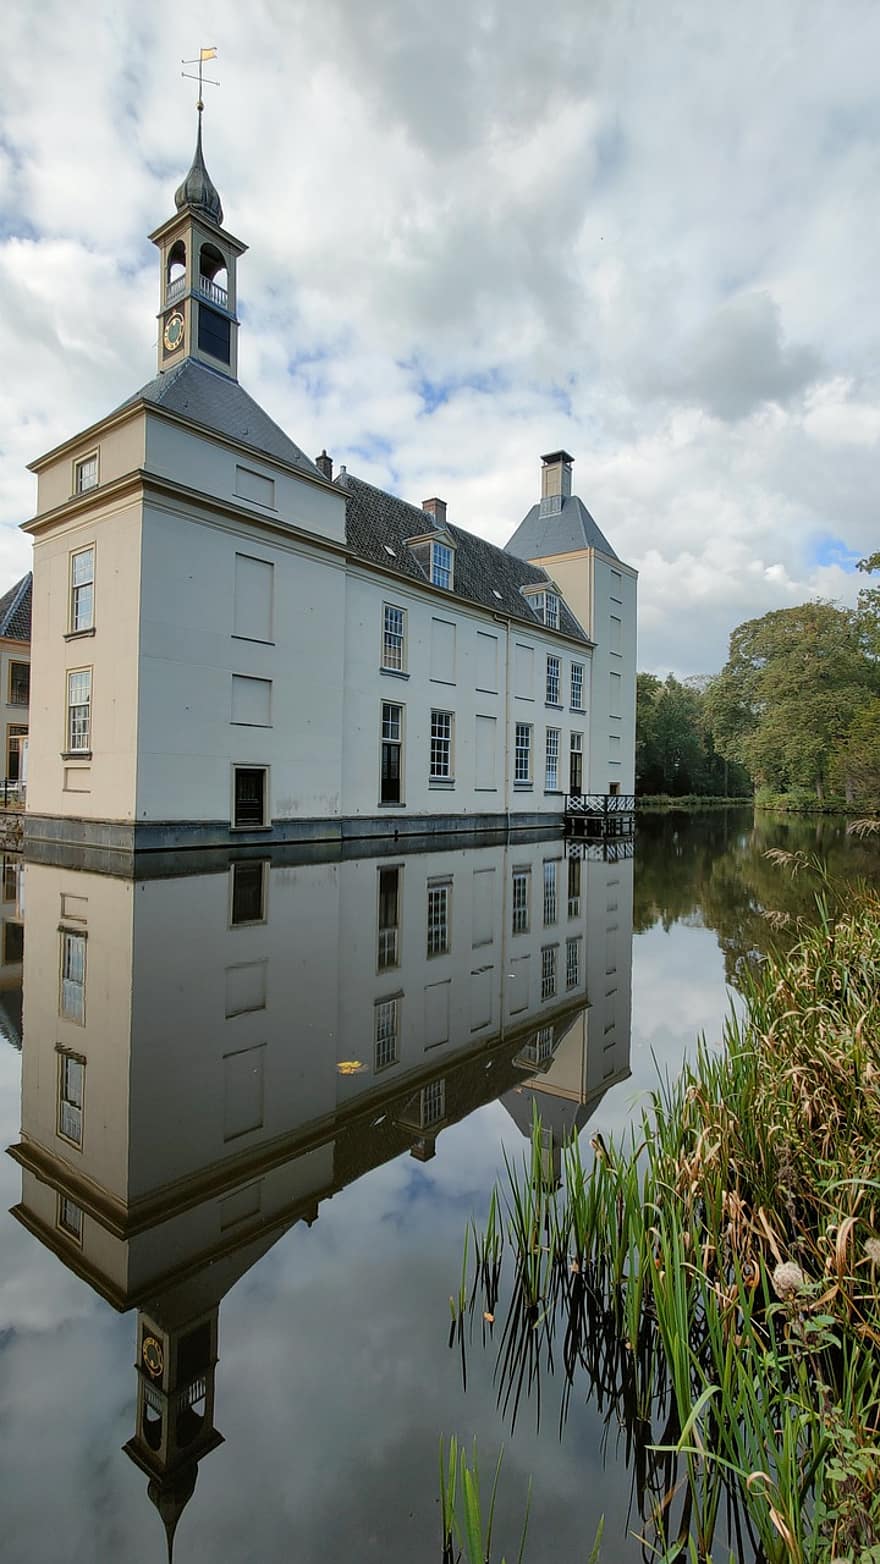 Huis Te Warmond, Haus in Warmont, Sumpf, Süßwassersumpf, warmond, Niederlande